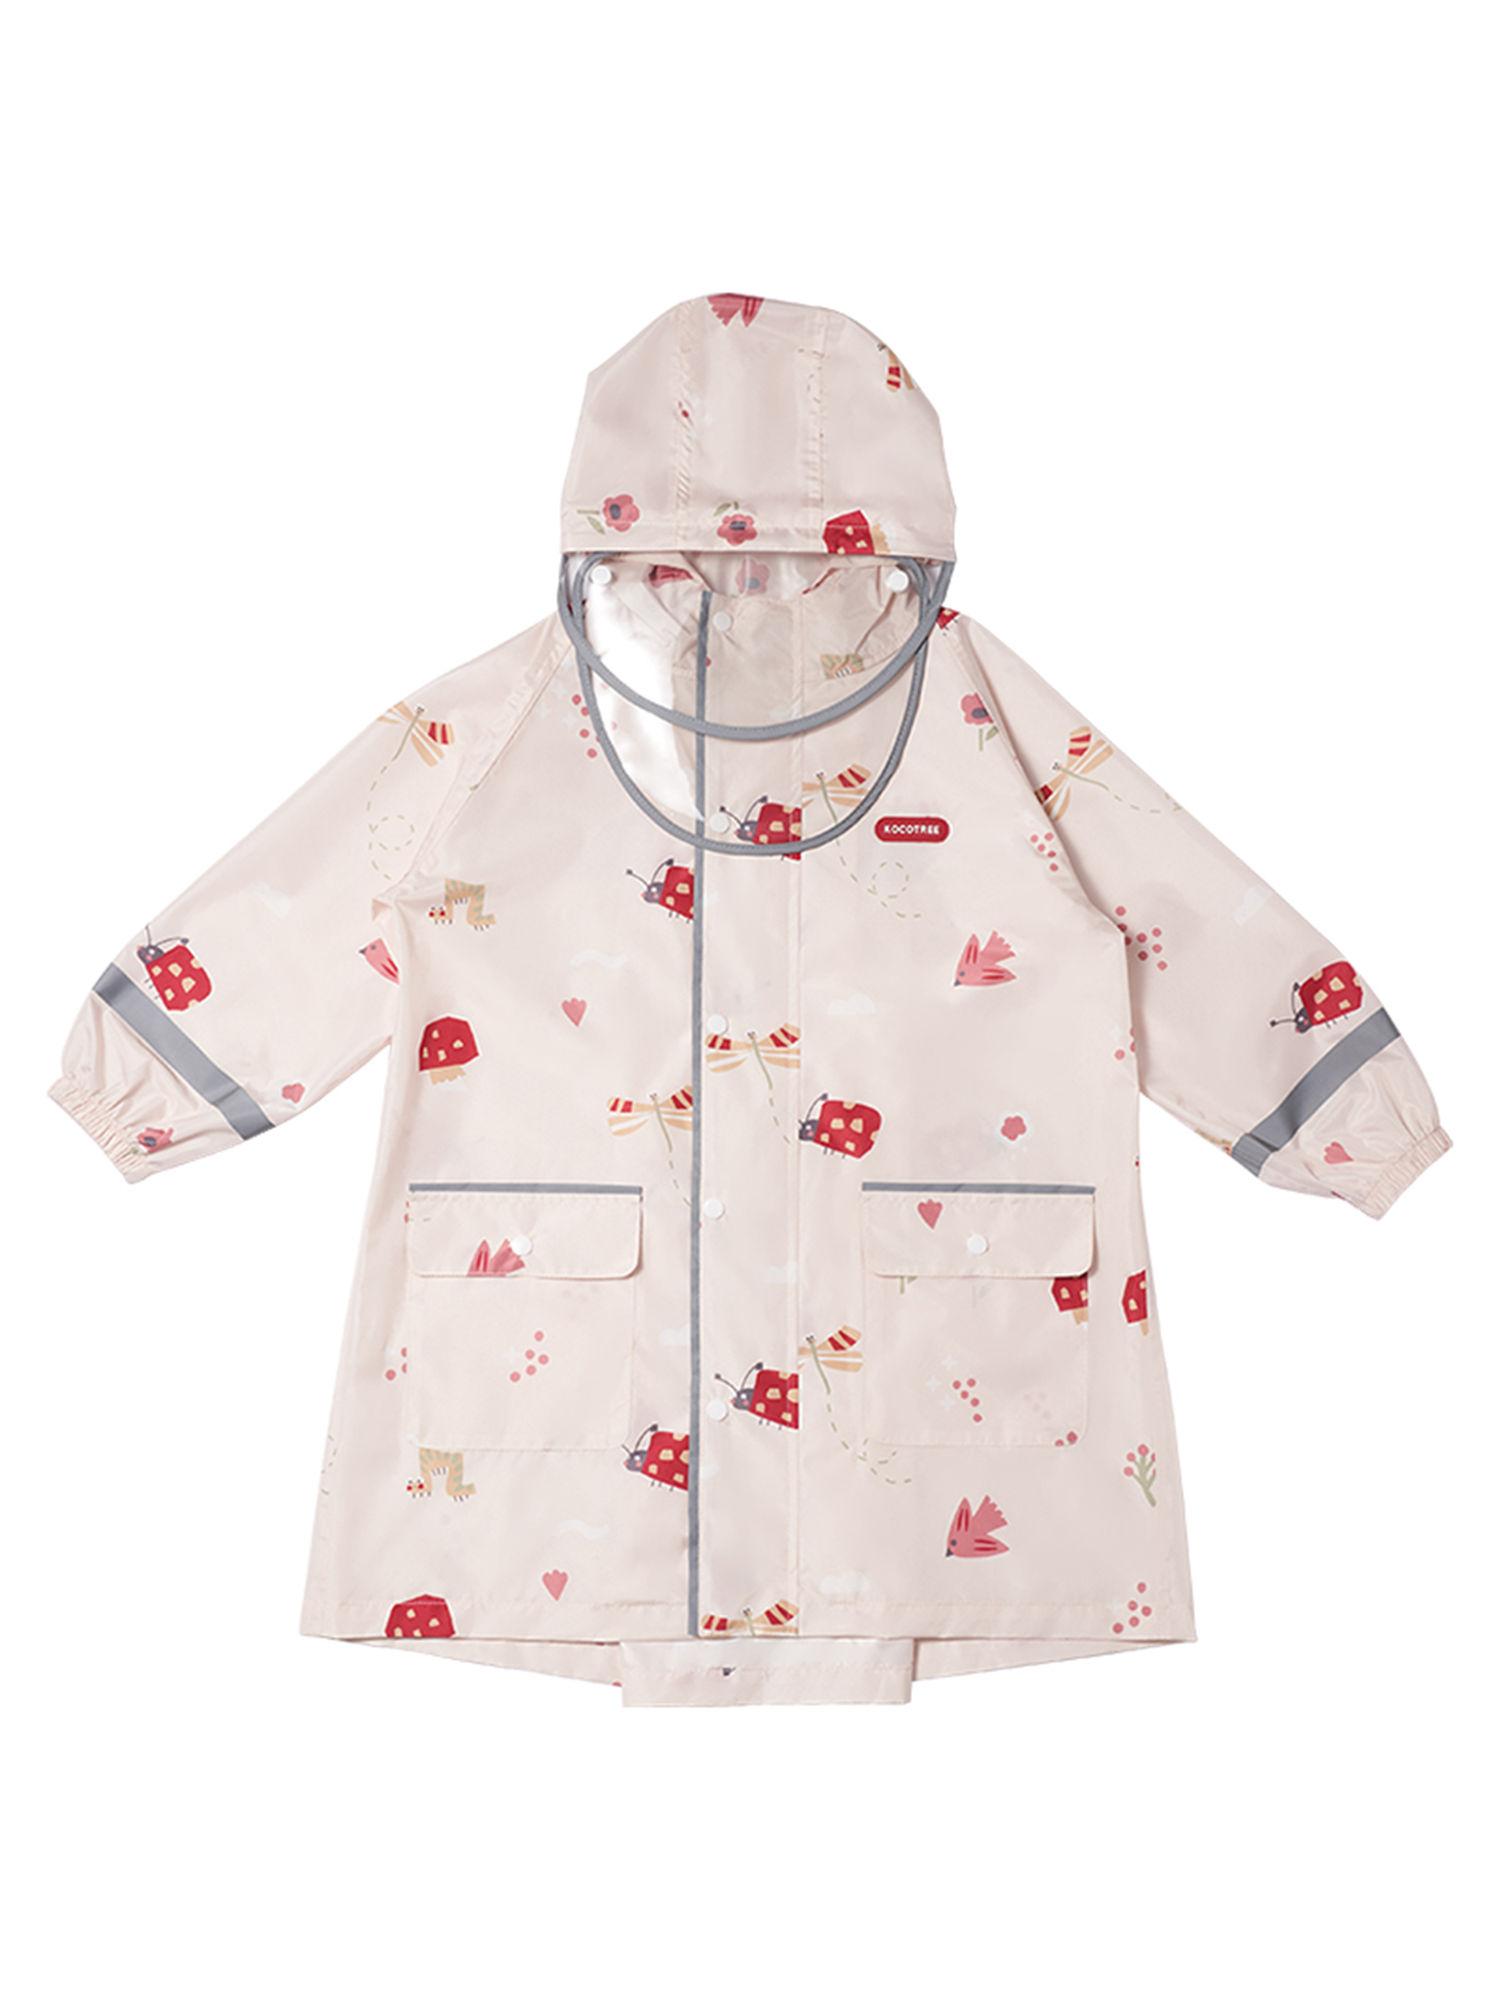 cream woodland butterfly theme kids raincoat jacket style